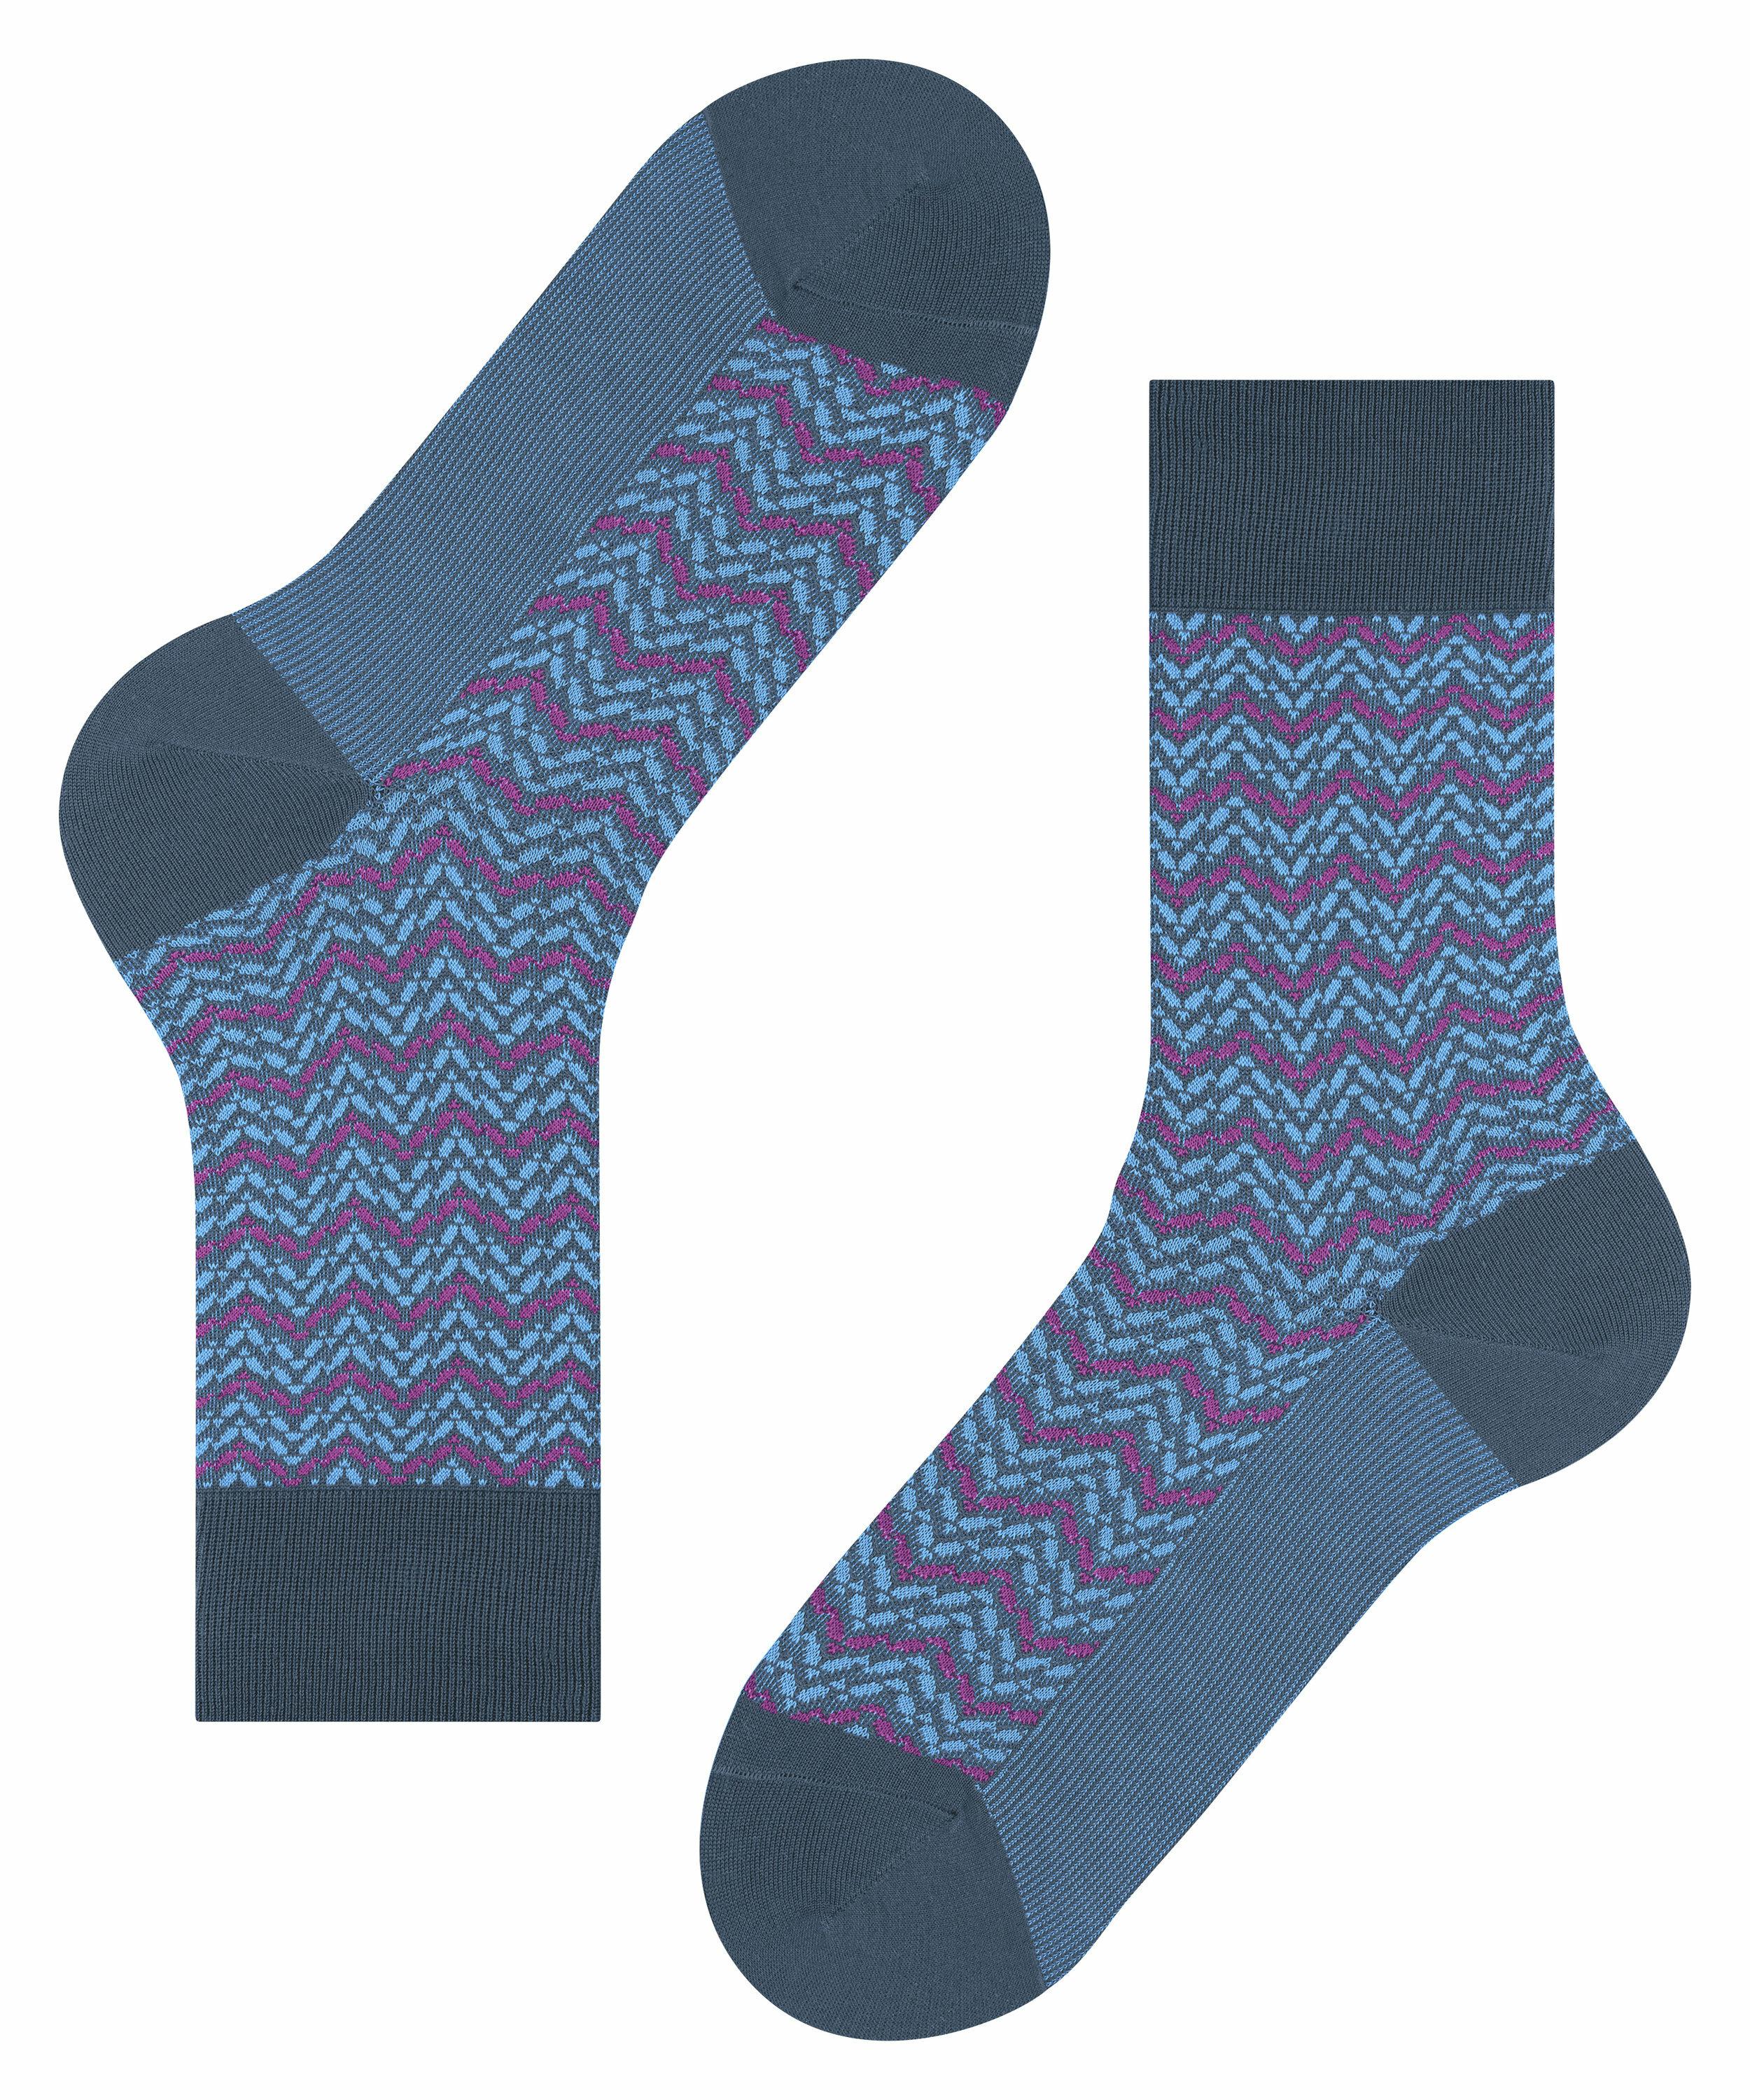 FALKE Colour Waves Herren Socken, 43-44, Blau, AnderesMuster, Baumwolle, 12 günstig online kaufen